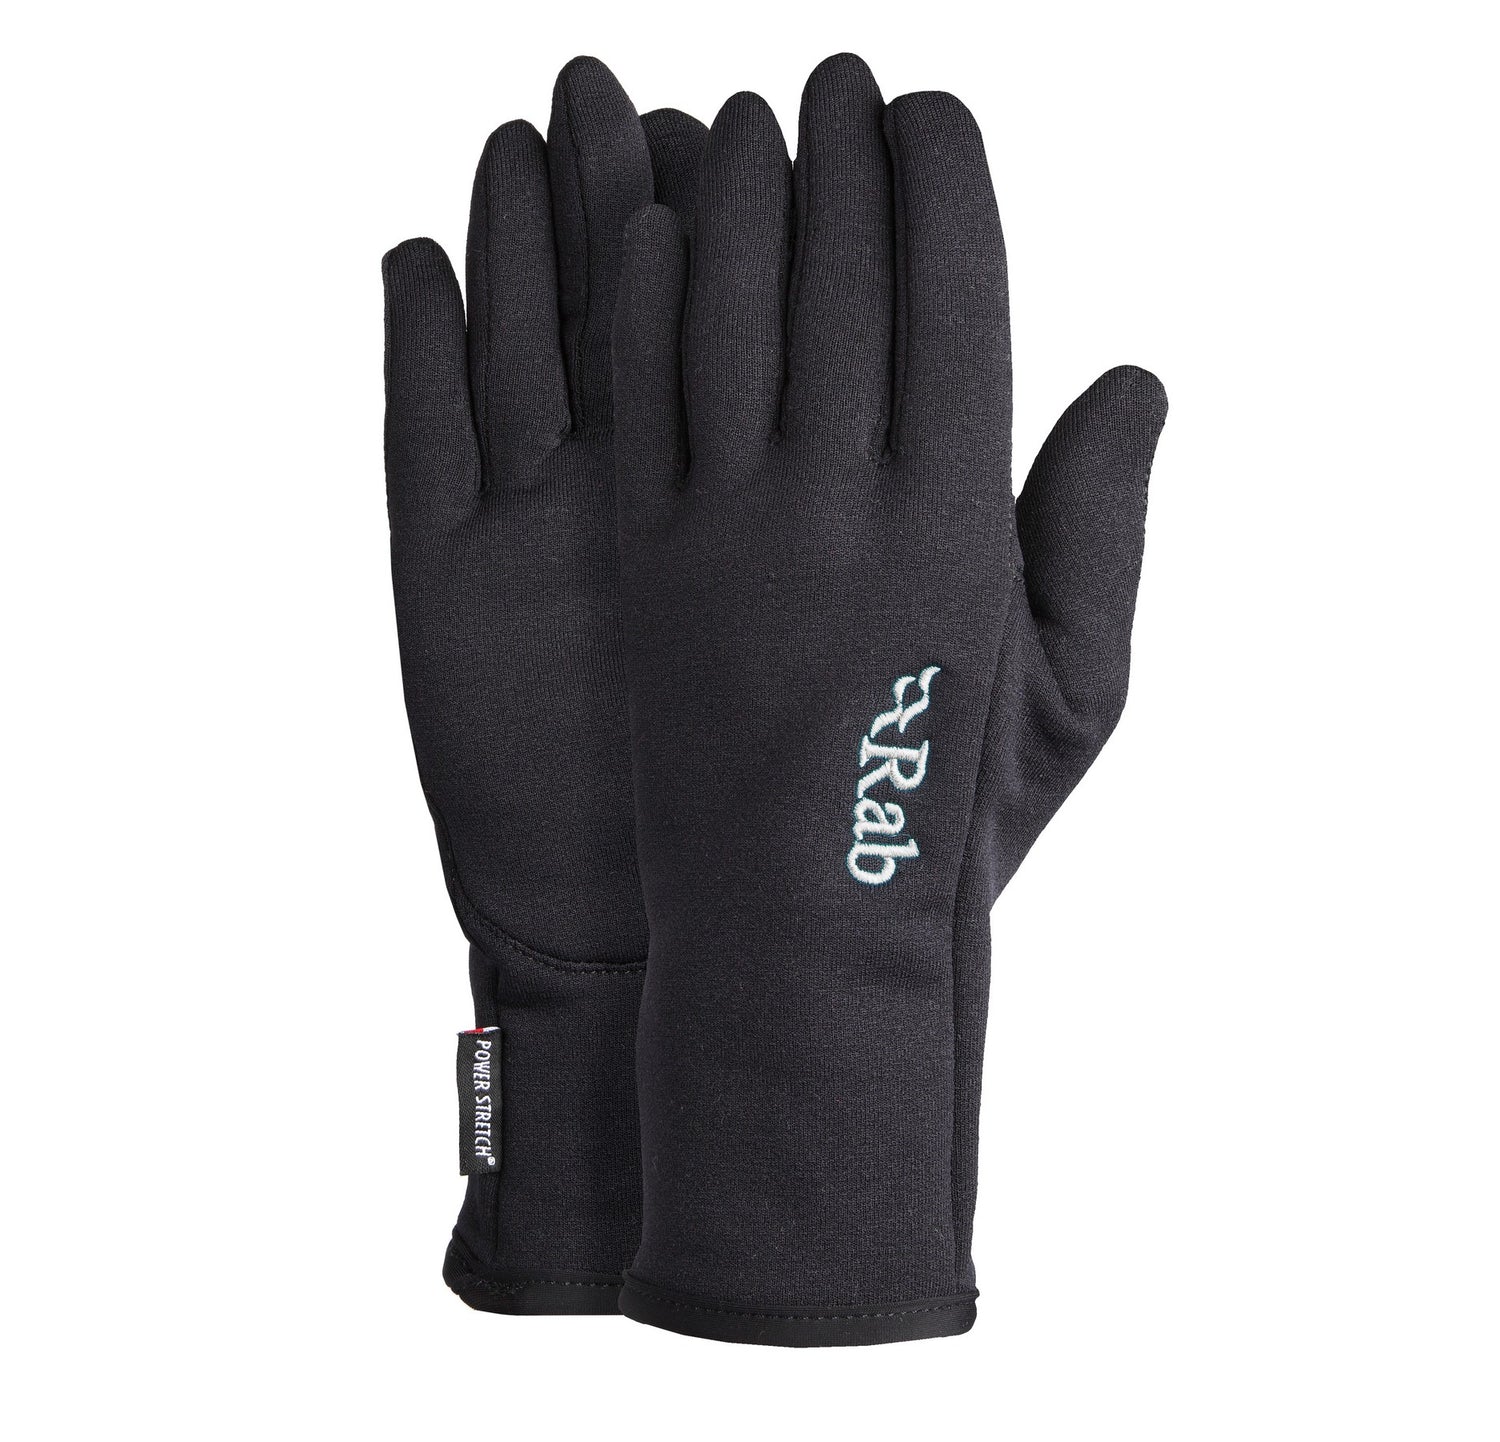 Power Stretch Pro Gloves - Black